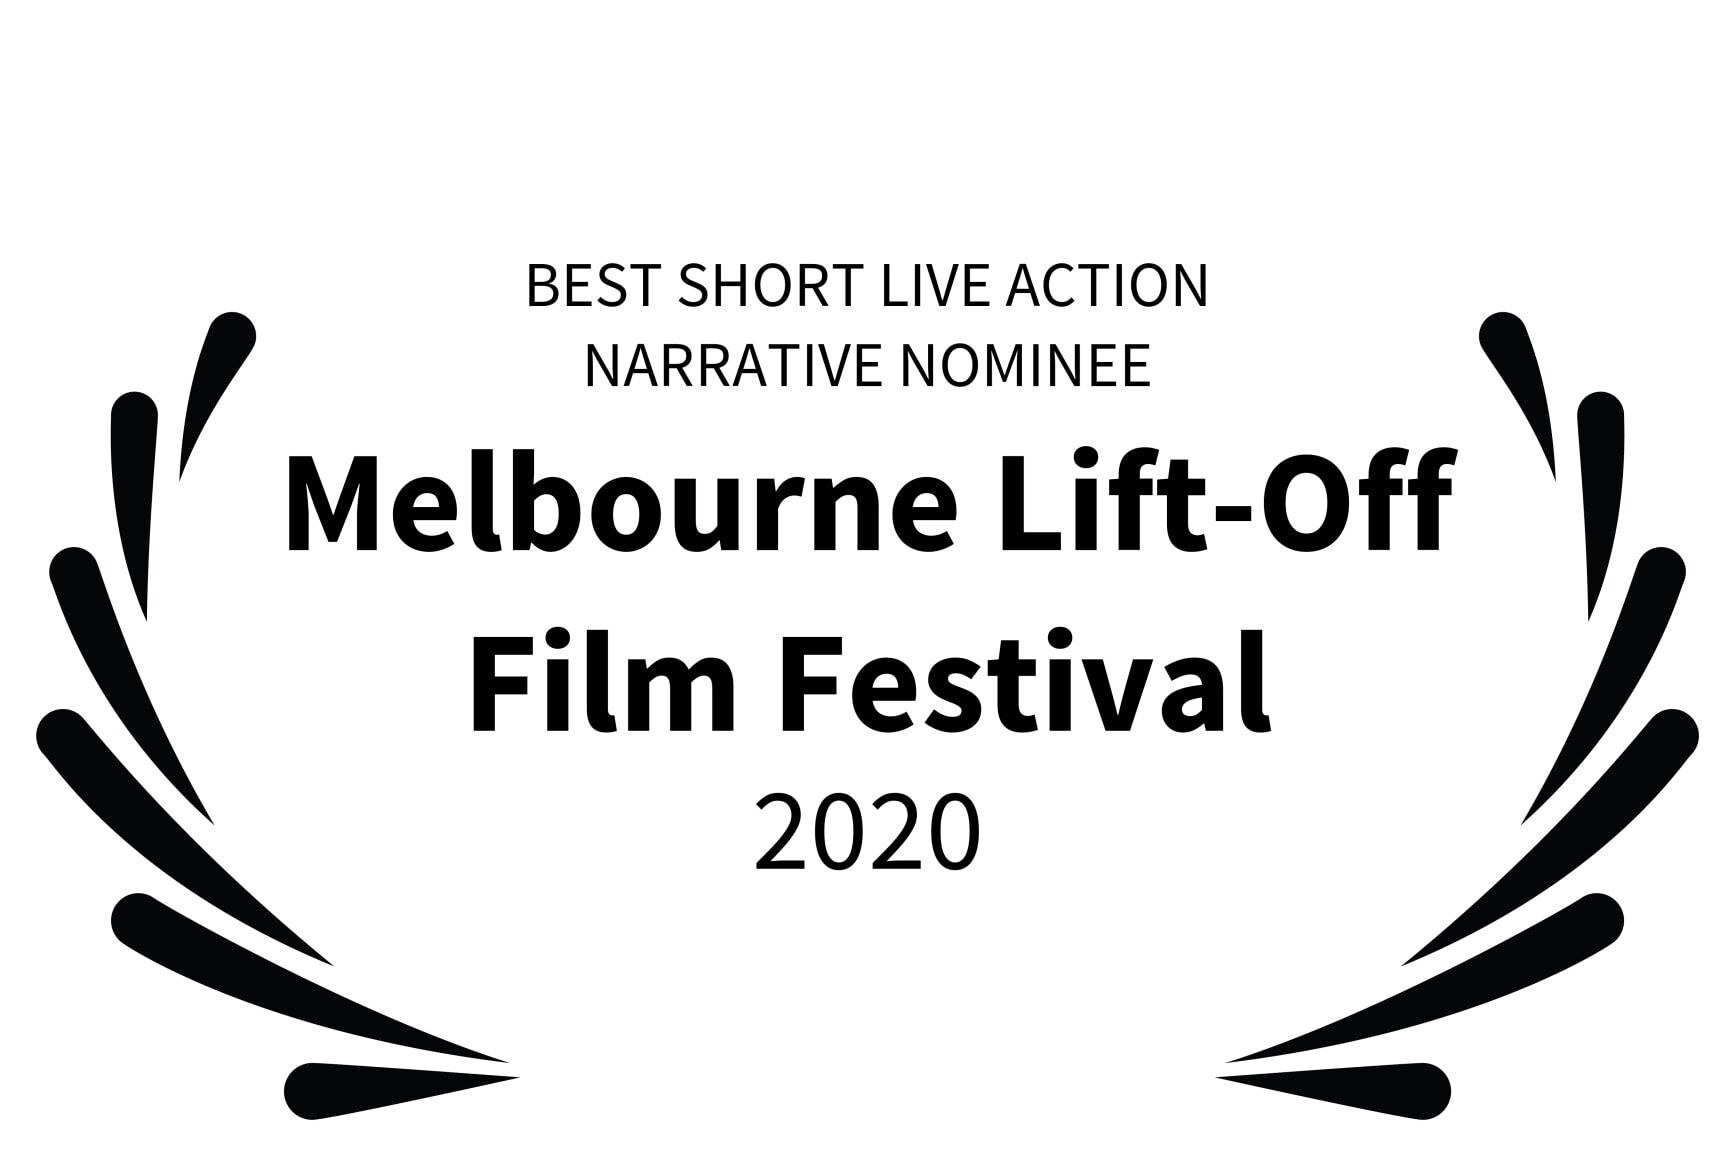 BEST SHORT LIVE ACTION NARRATIVE NOMINEE - Melbourne Lift-Off Film Festival - 2020